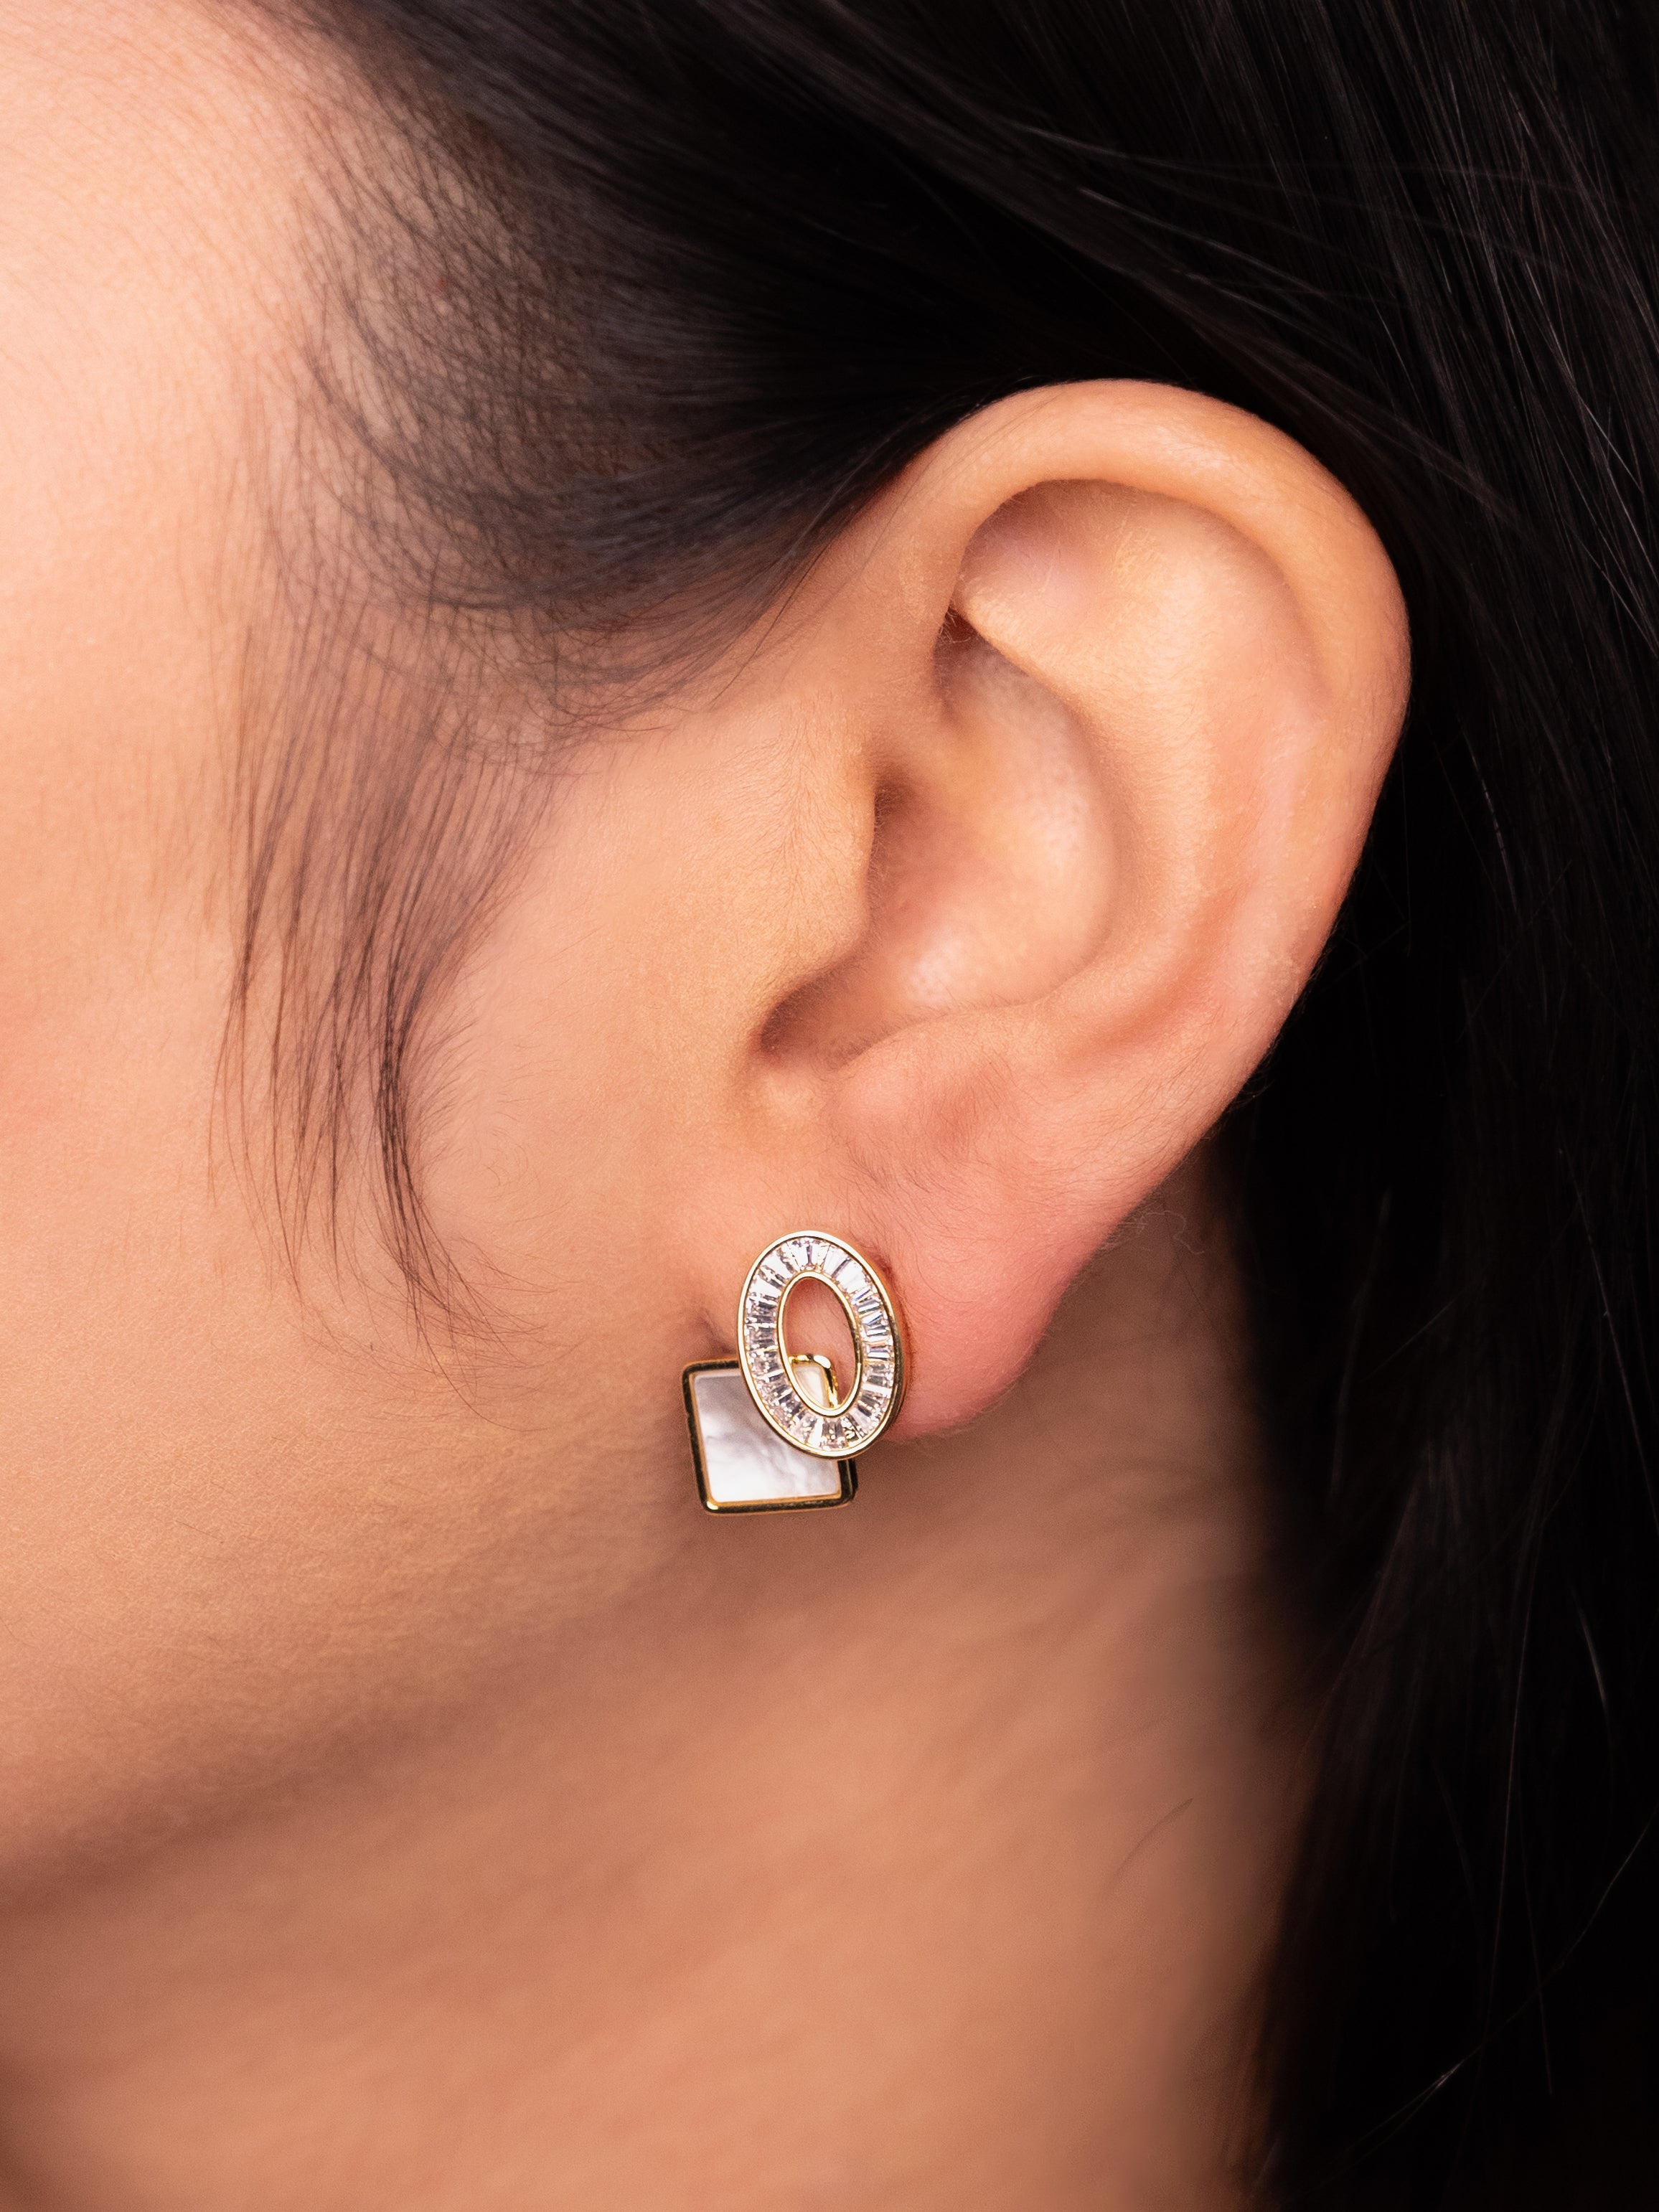 Geometrical MOP Stud Earrings | 18k Gold Plated